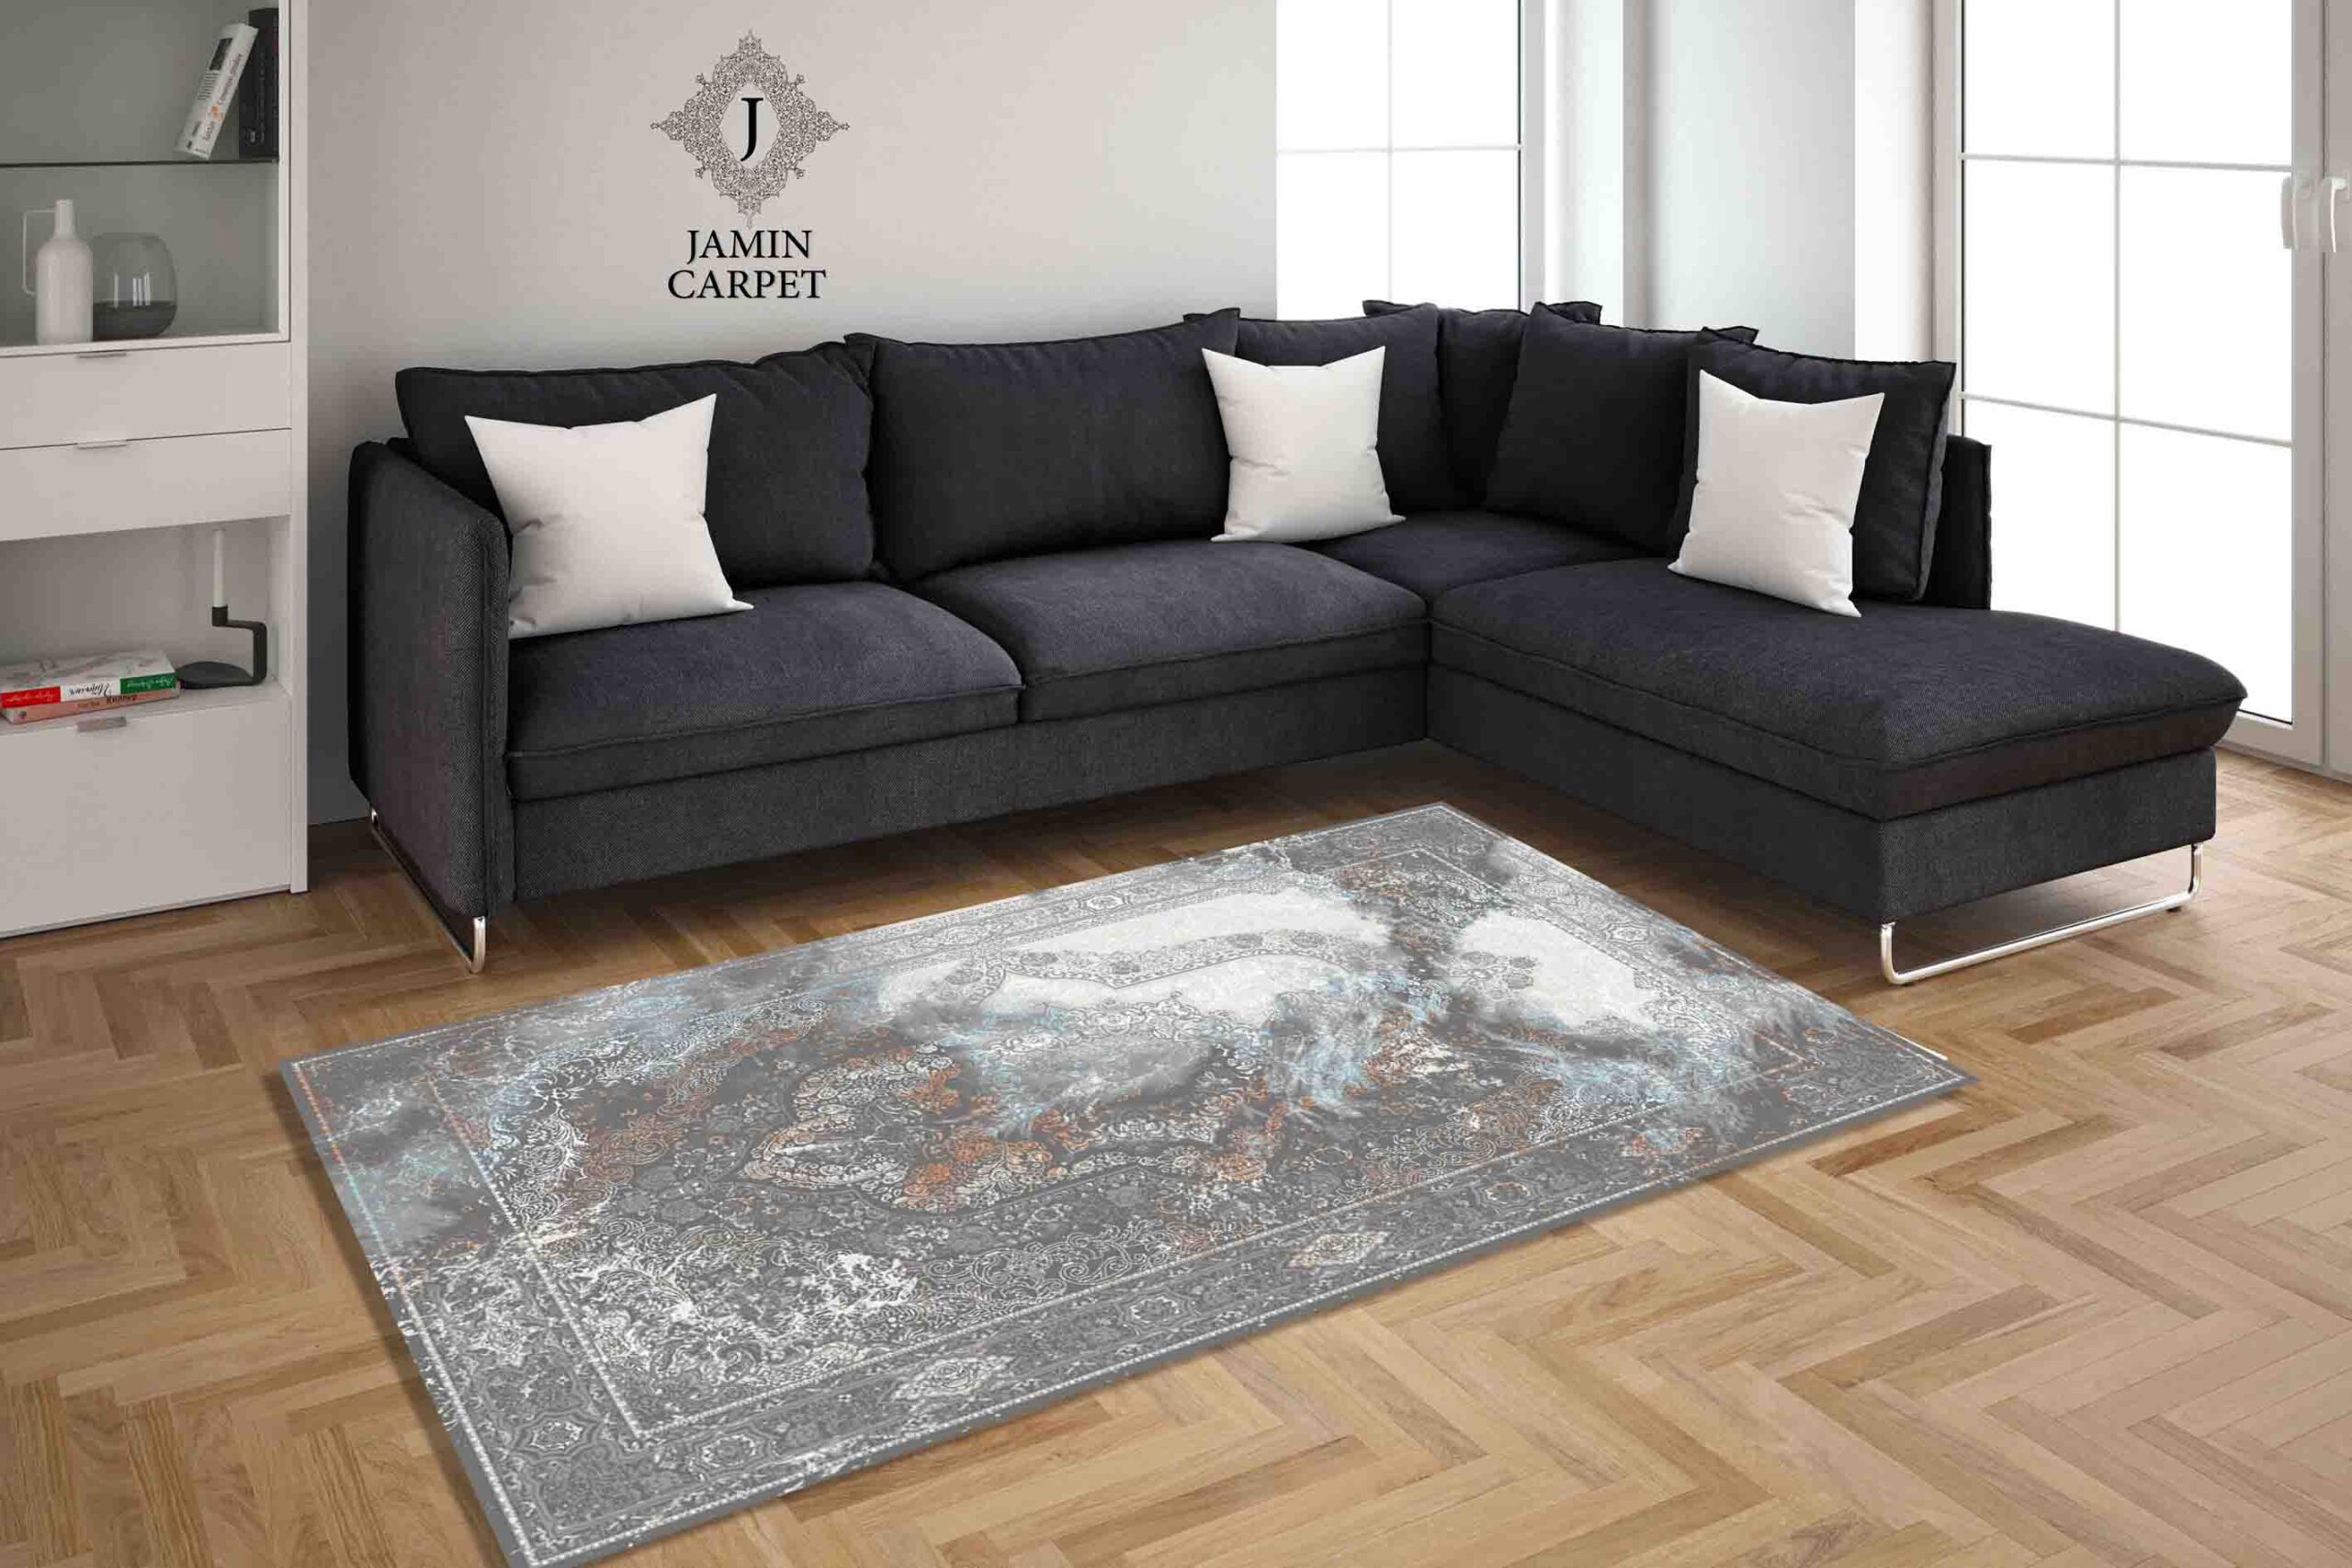 Fantasy carpet code 229 comb 400 density 1800 all acrylic